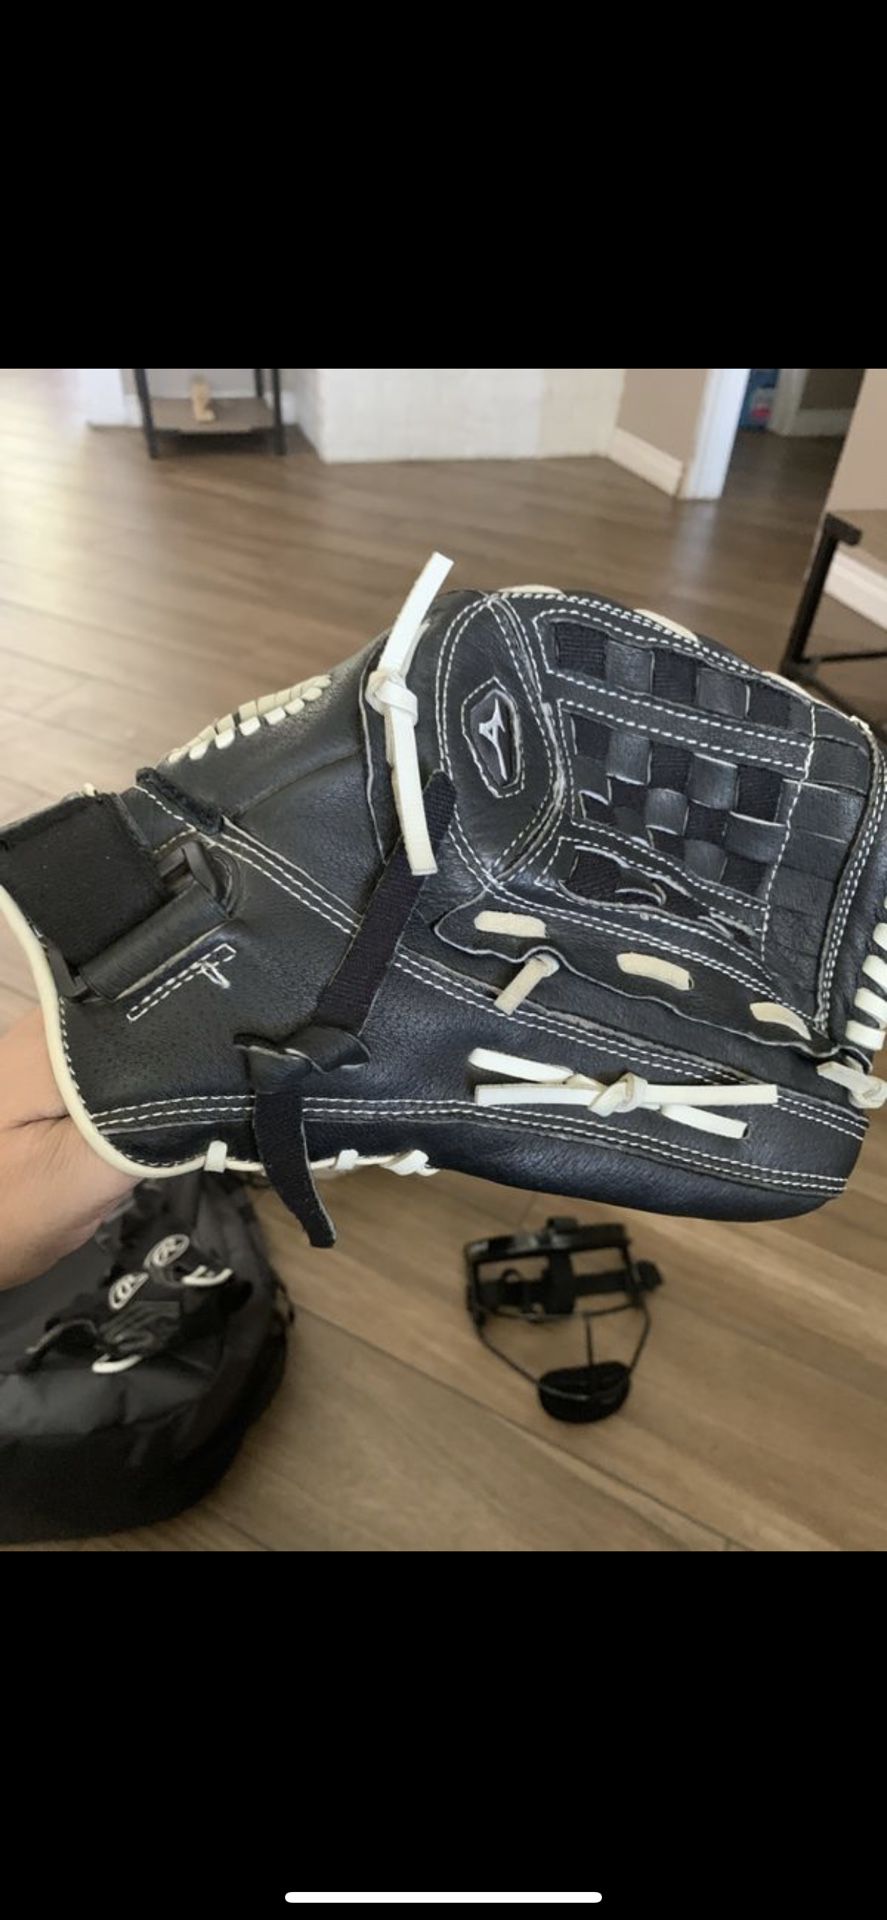 Softball fast pitch glove